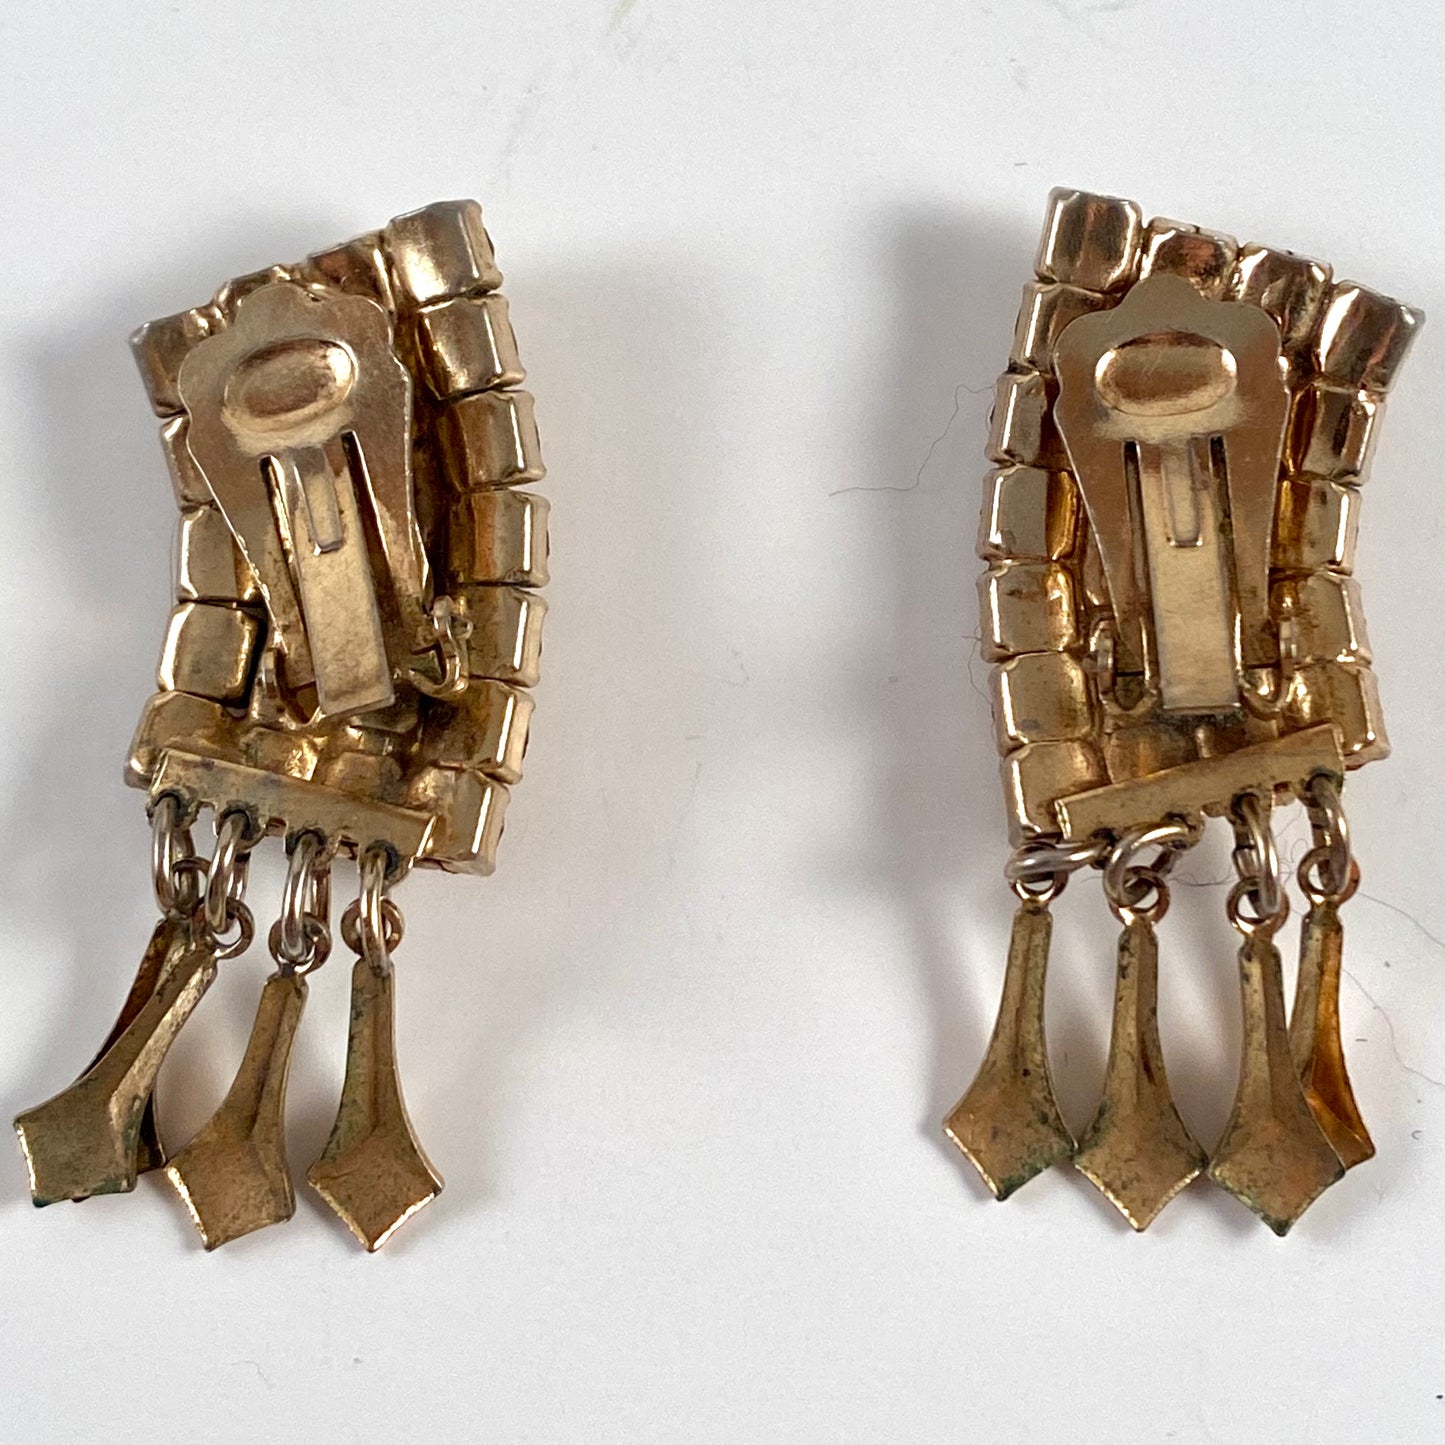 1960s Rhinestone Earrings